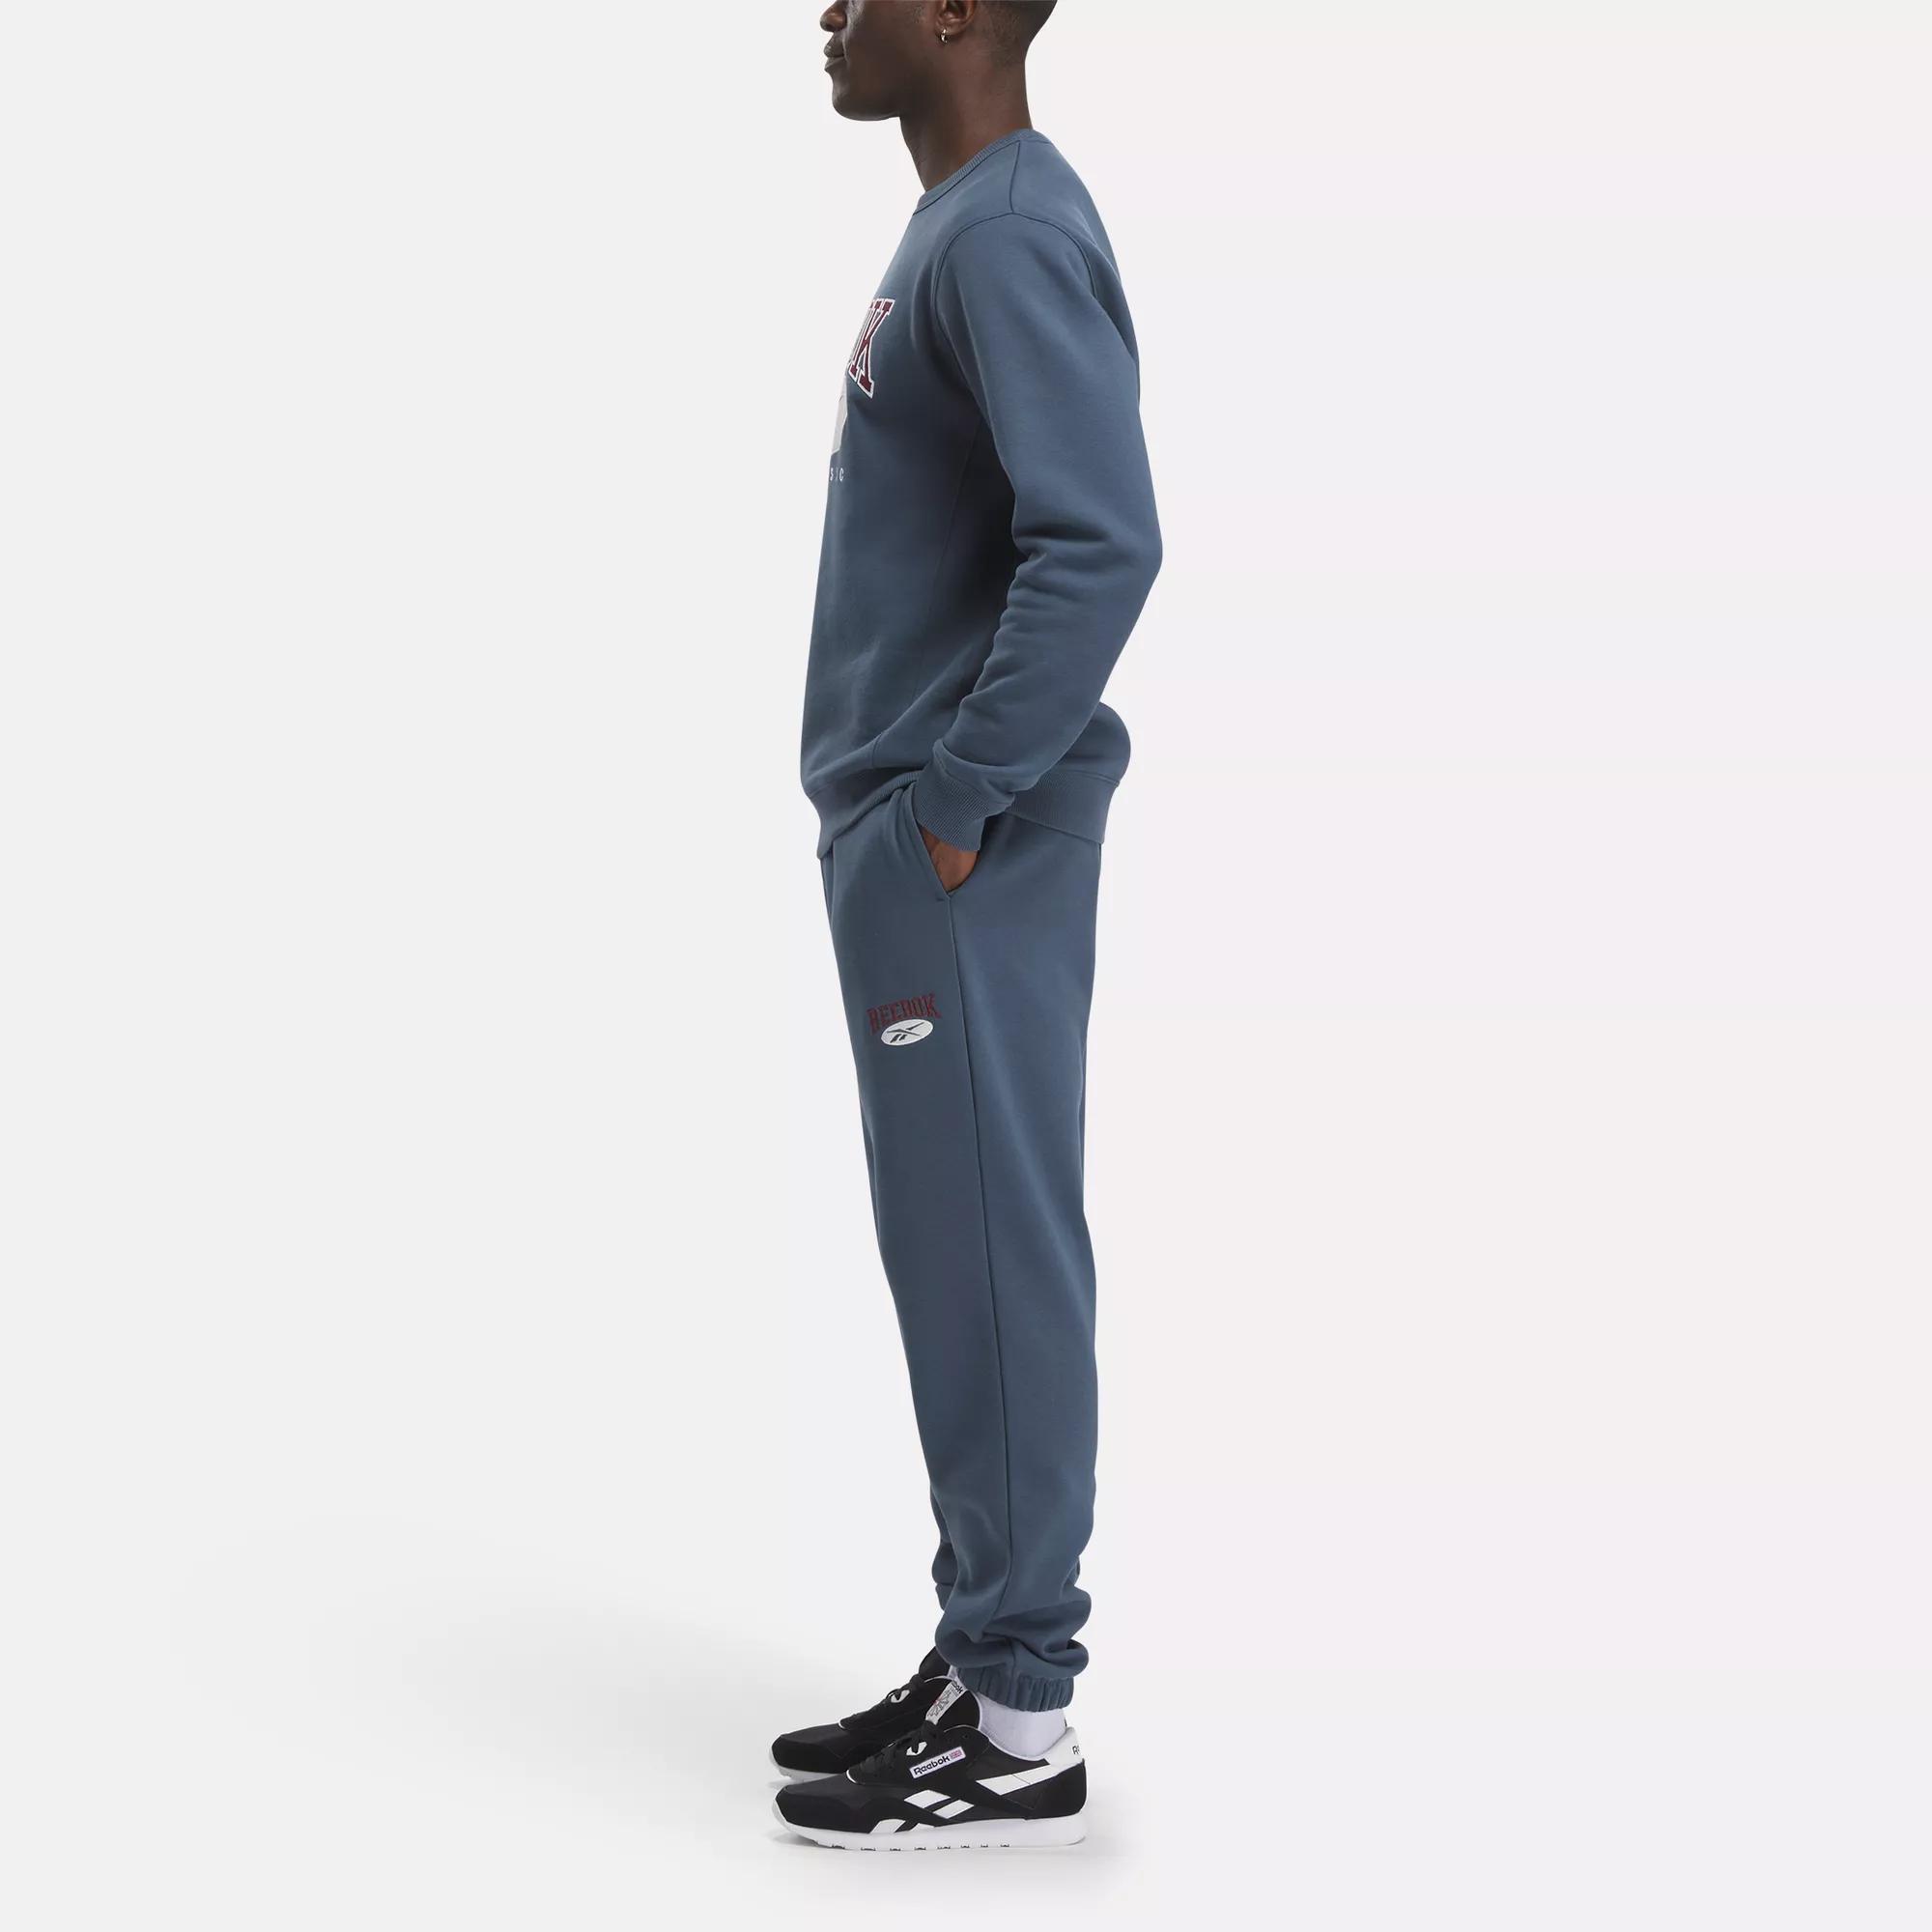 Reebok Men's Basketball Gold-Tone Snap Pants, Created for Macy's - Macy's